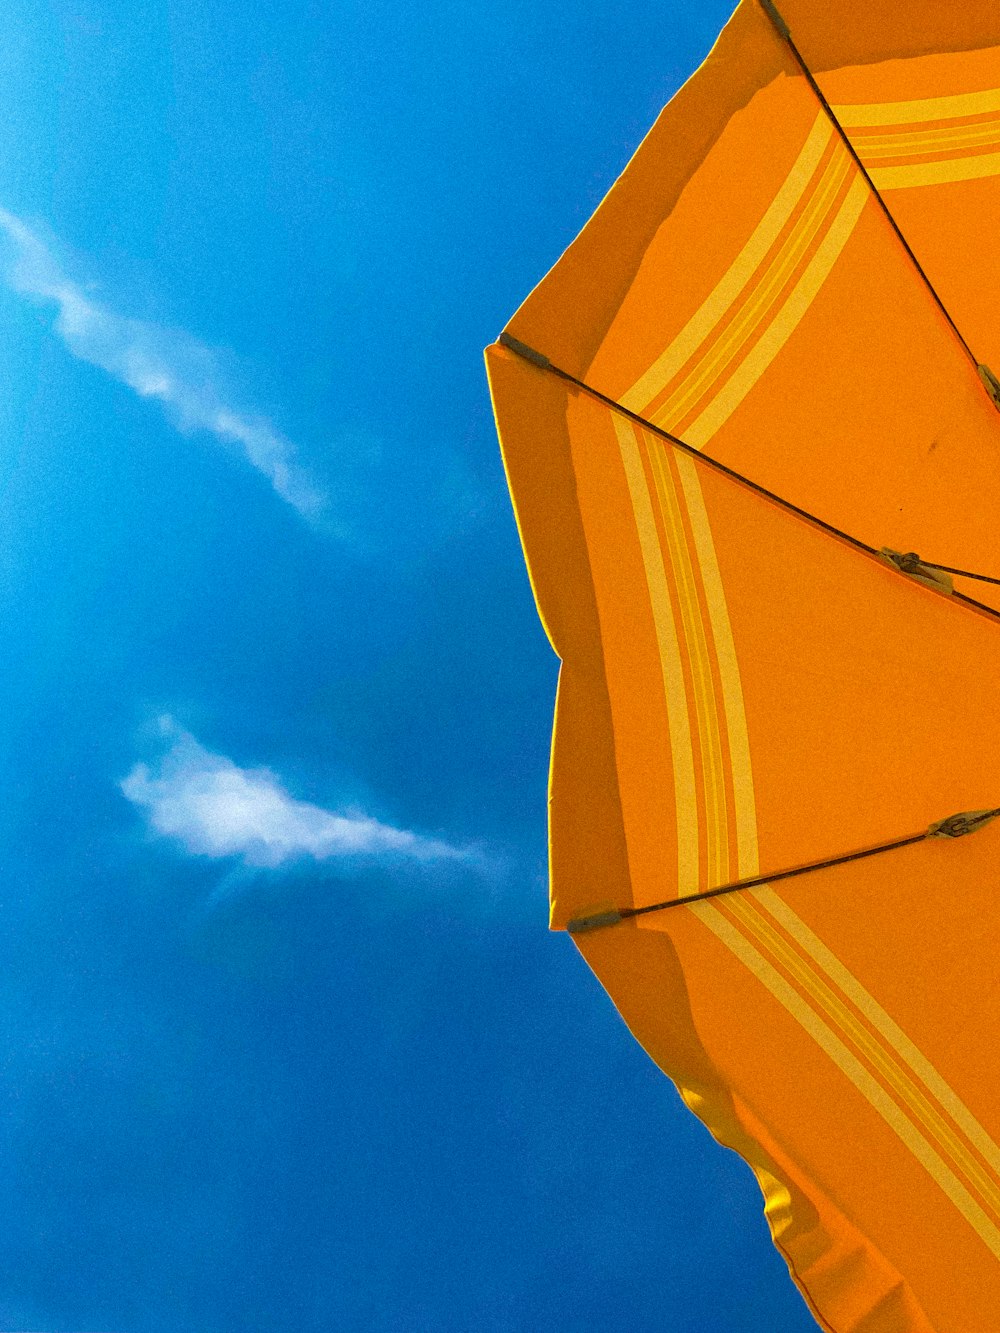 yellow umbrella under blue sky during daytime